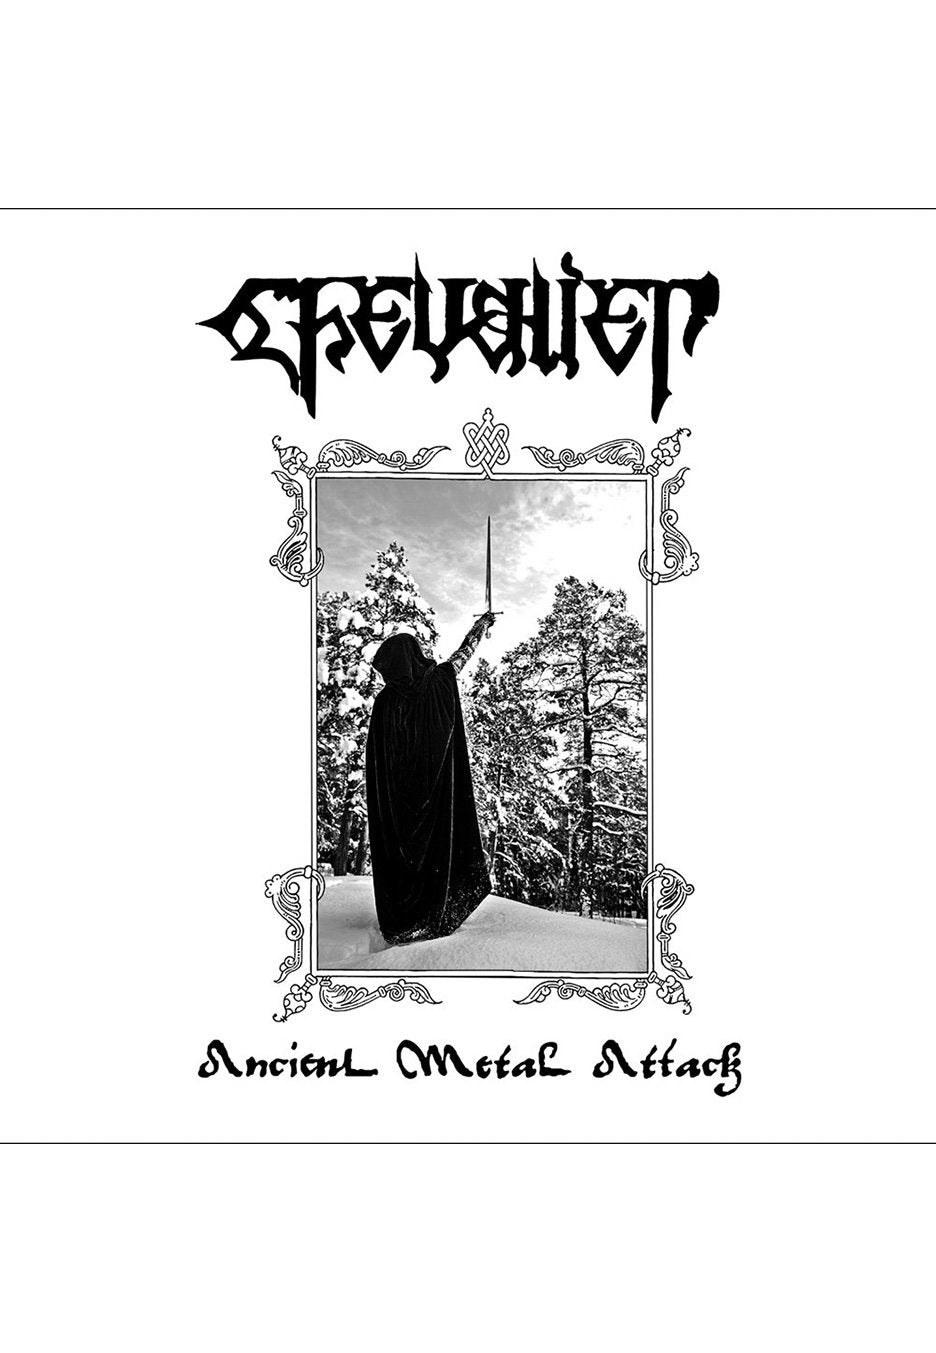 Chevalier - Ancient Metal Attack EP - Vinyl